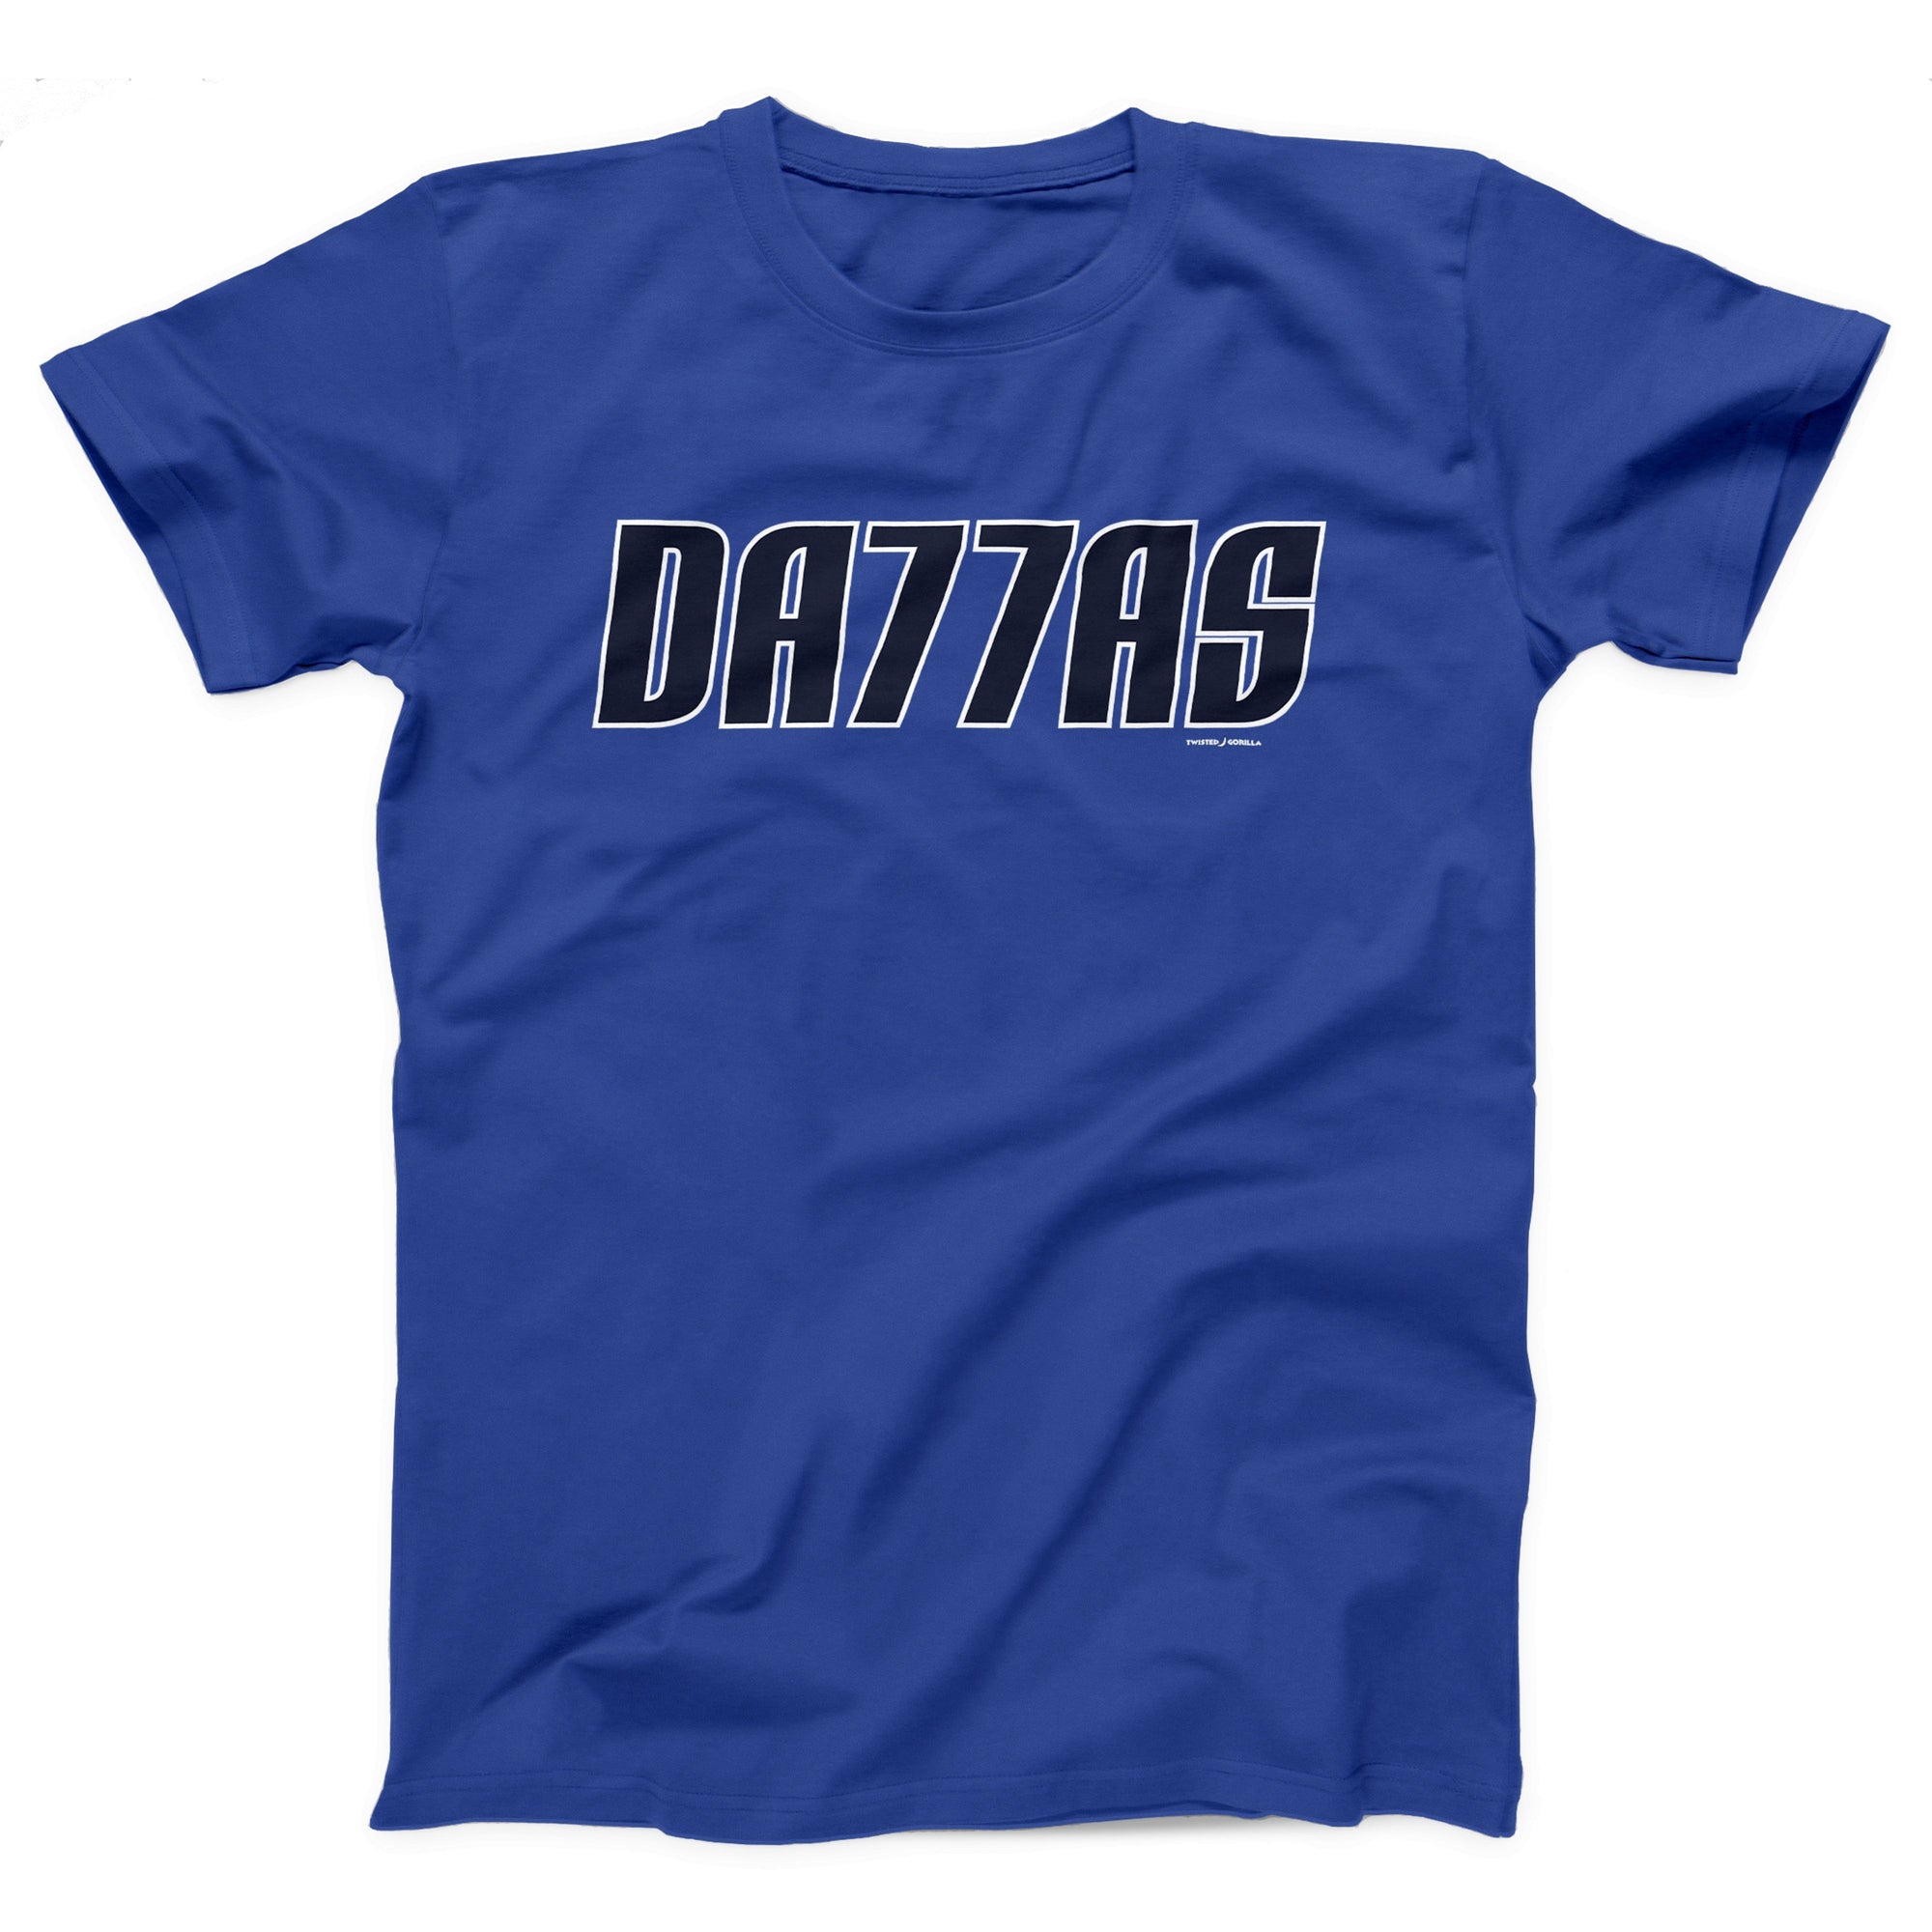 DA77AS Adult Unisex T-Shirt - Twisted Gorilla